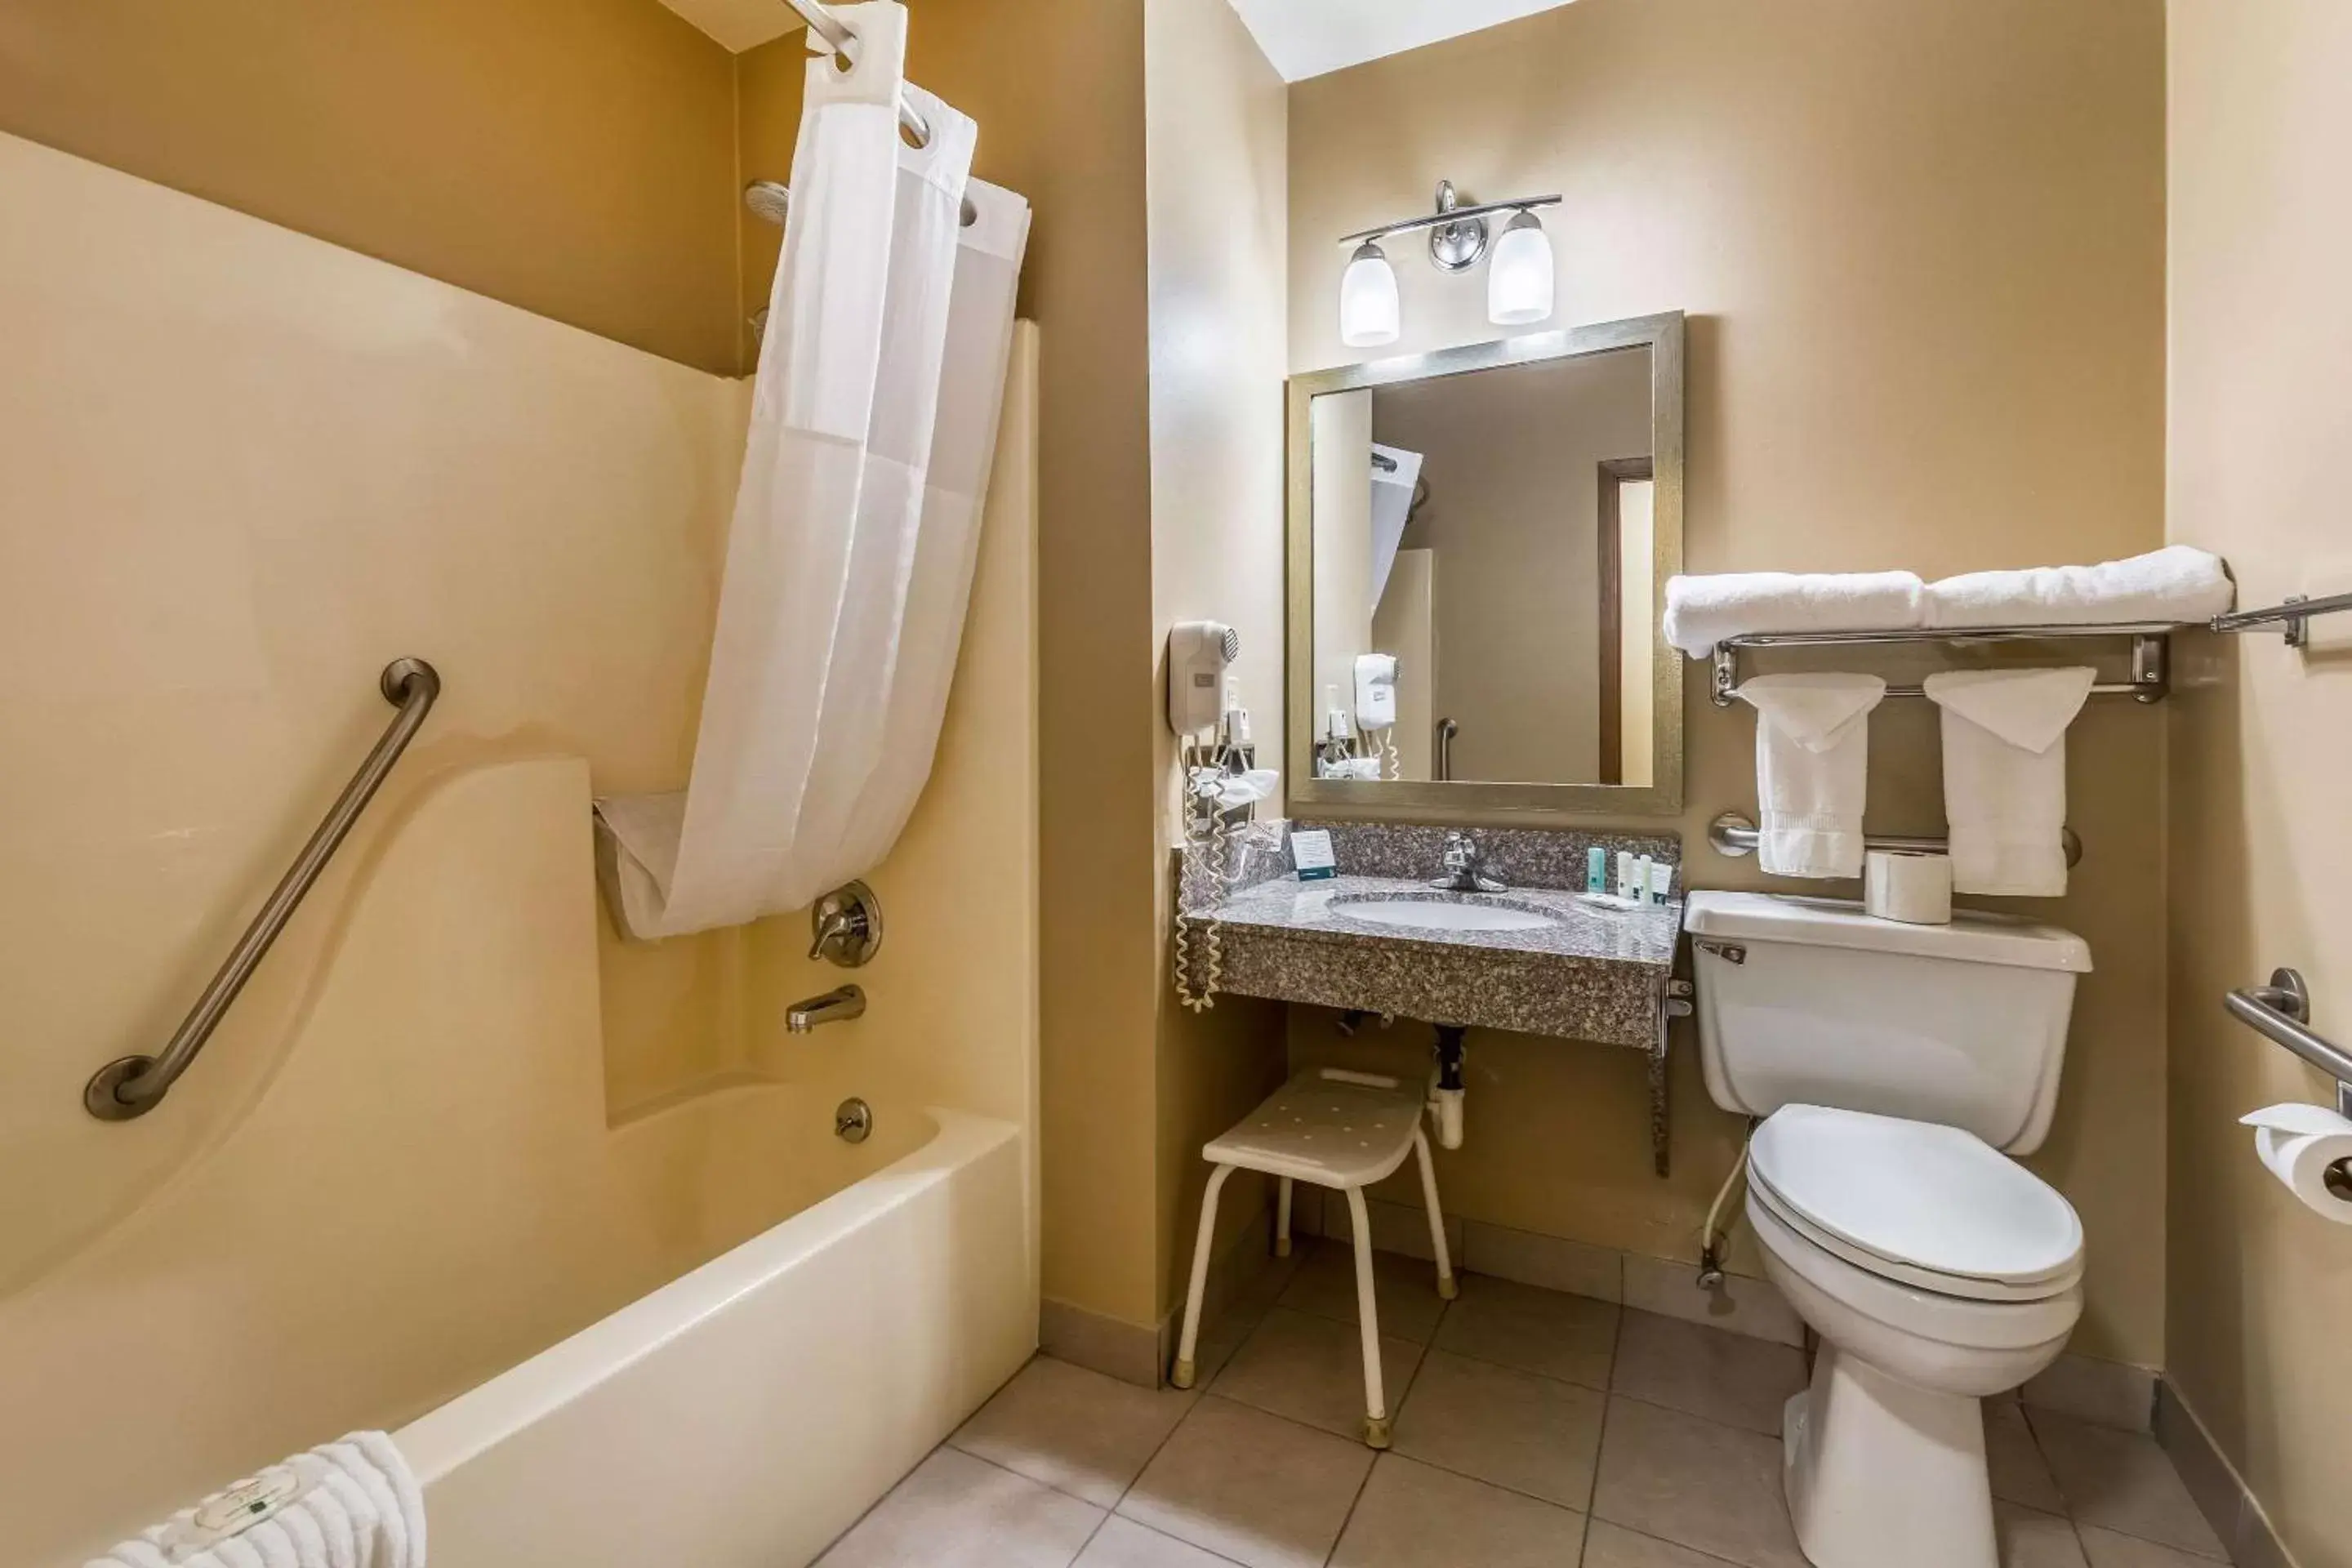 Photo of the whole room, Bathroom in Quality Inn I-74 Batesville